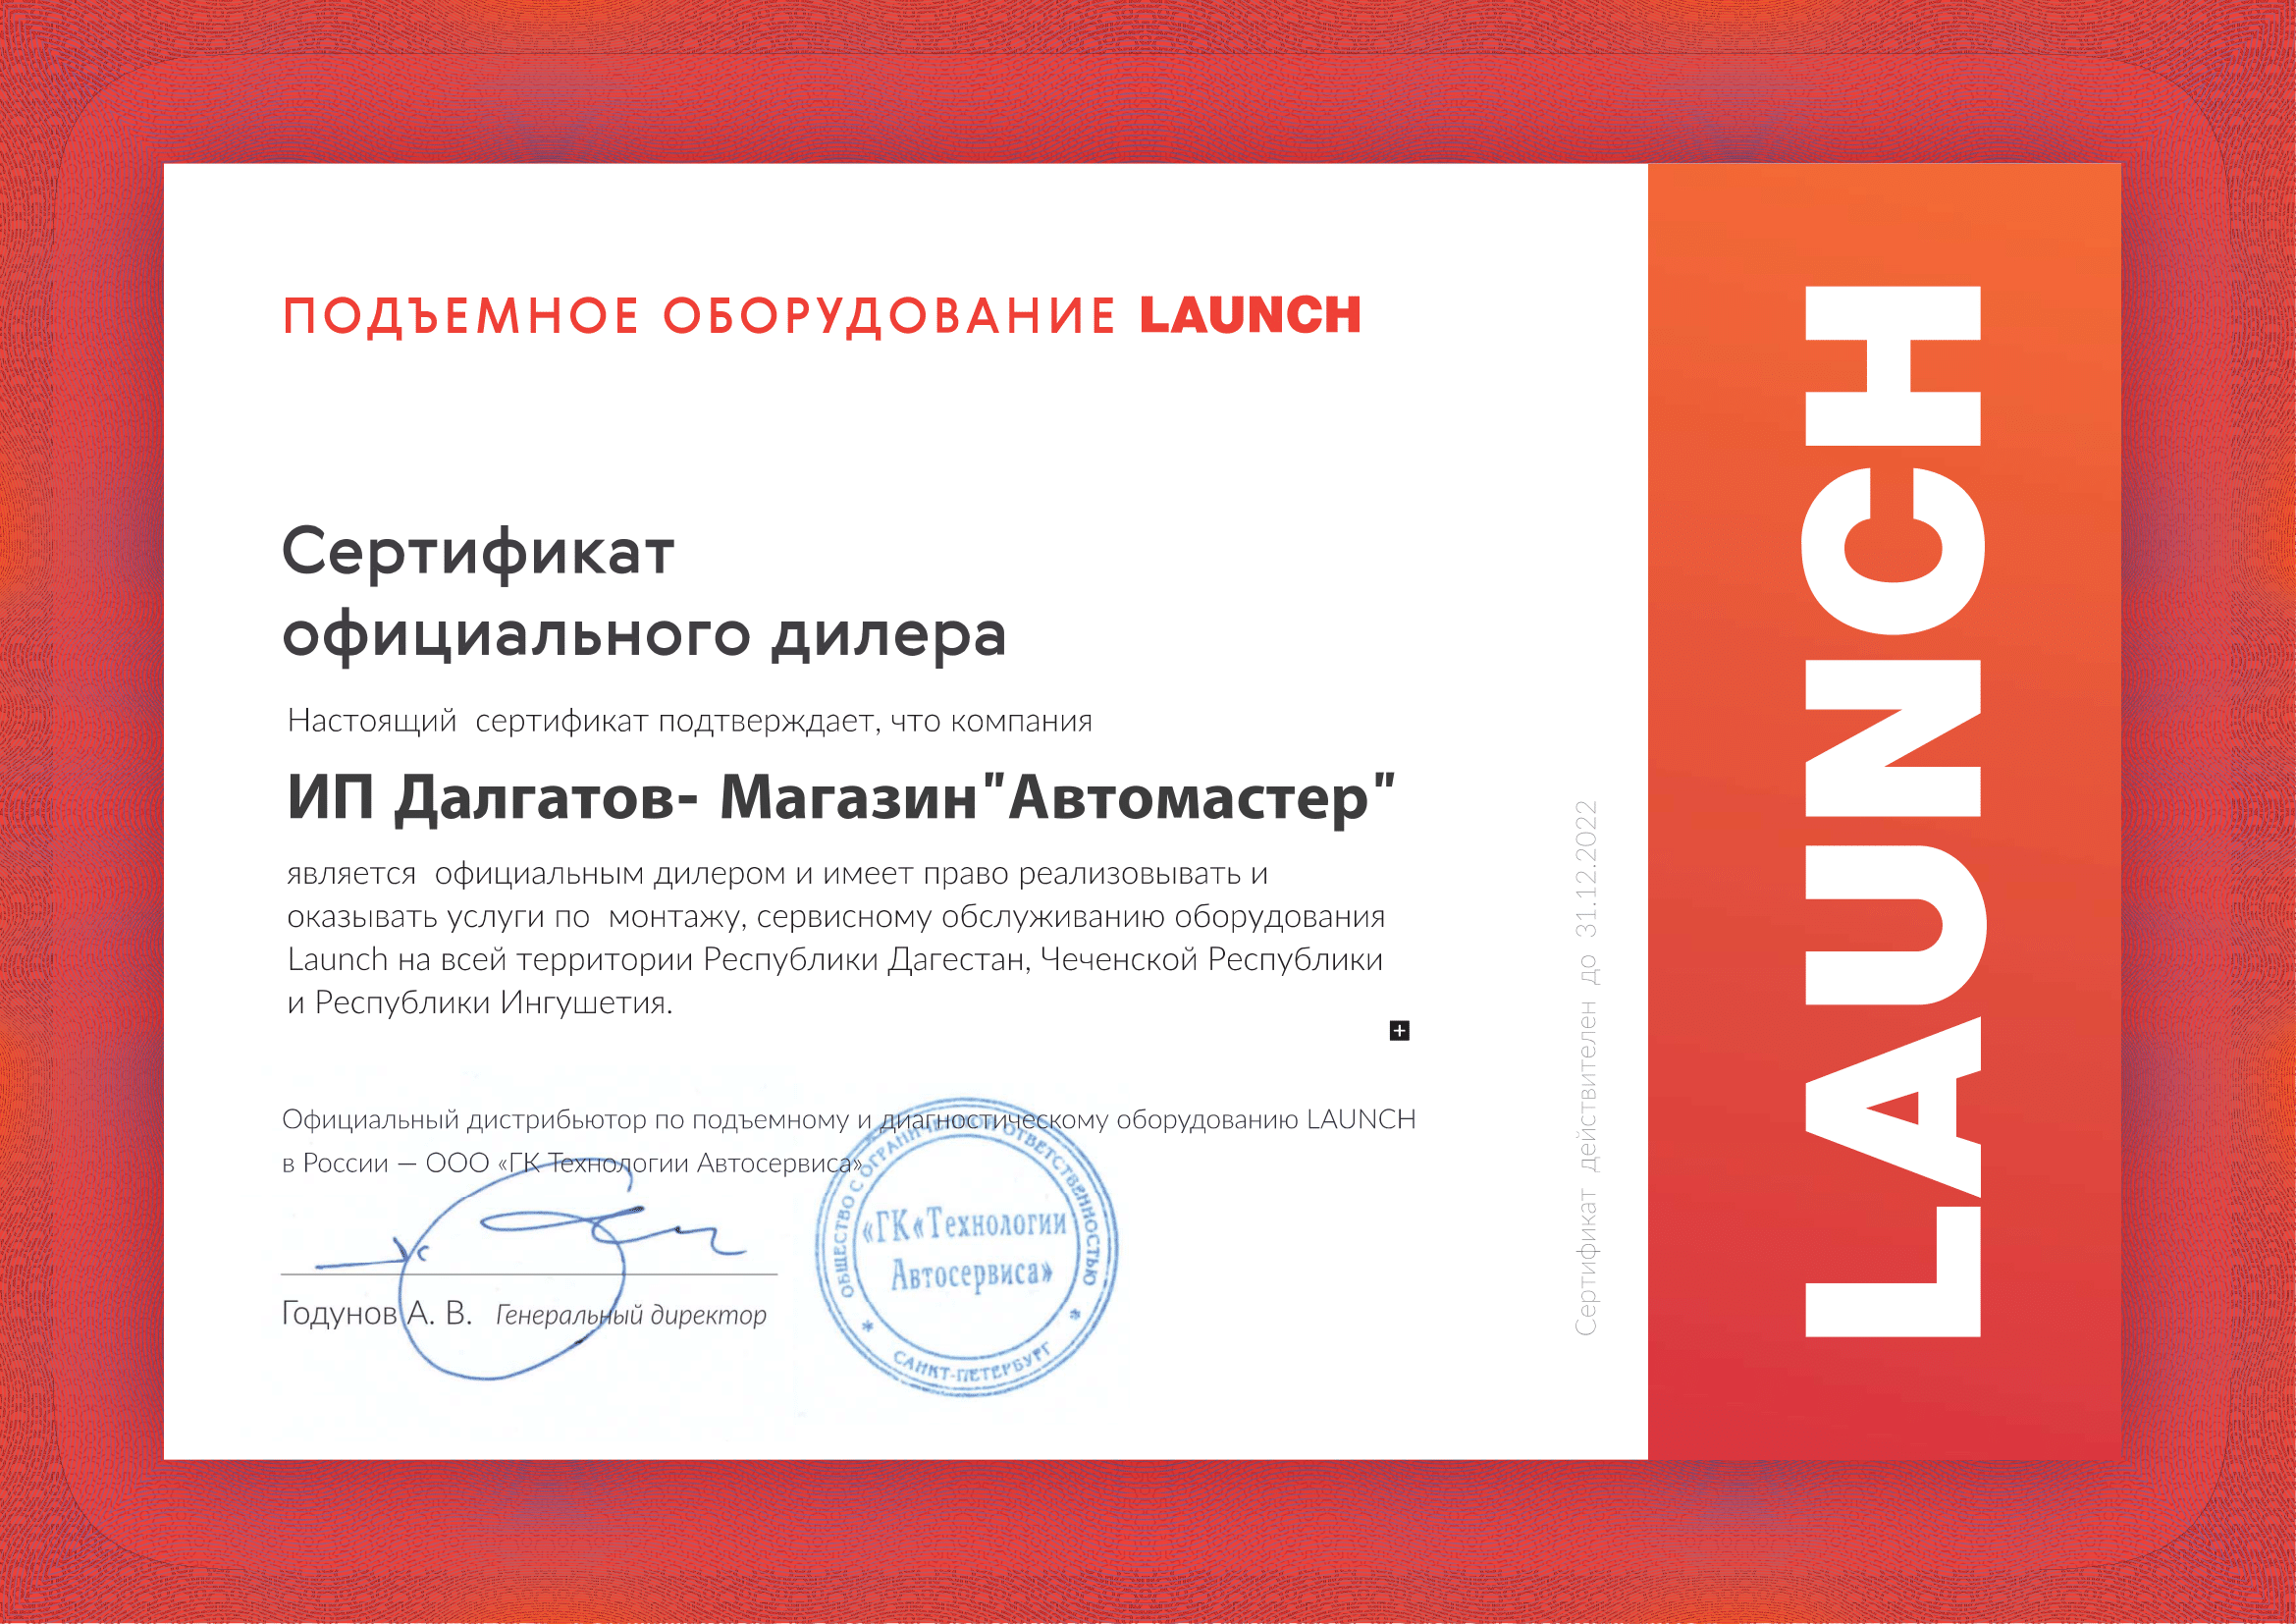 Launch company. Launch Tech co Ltd.